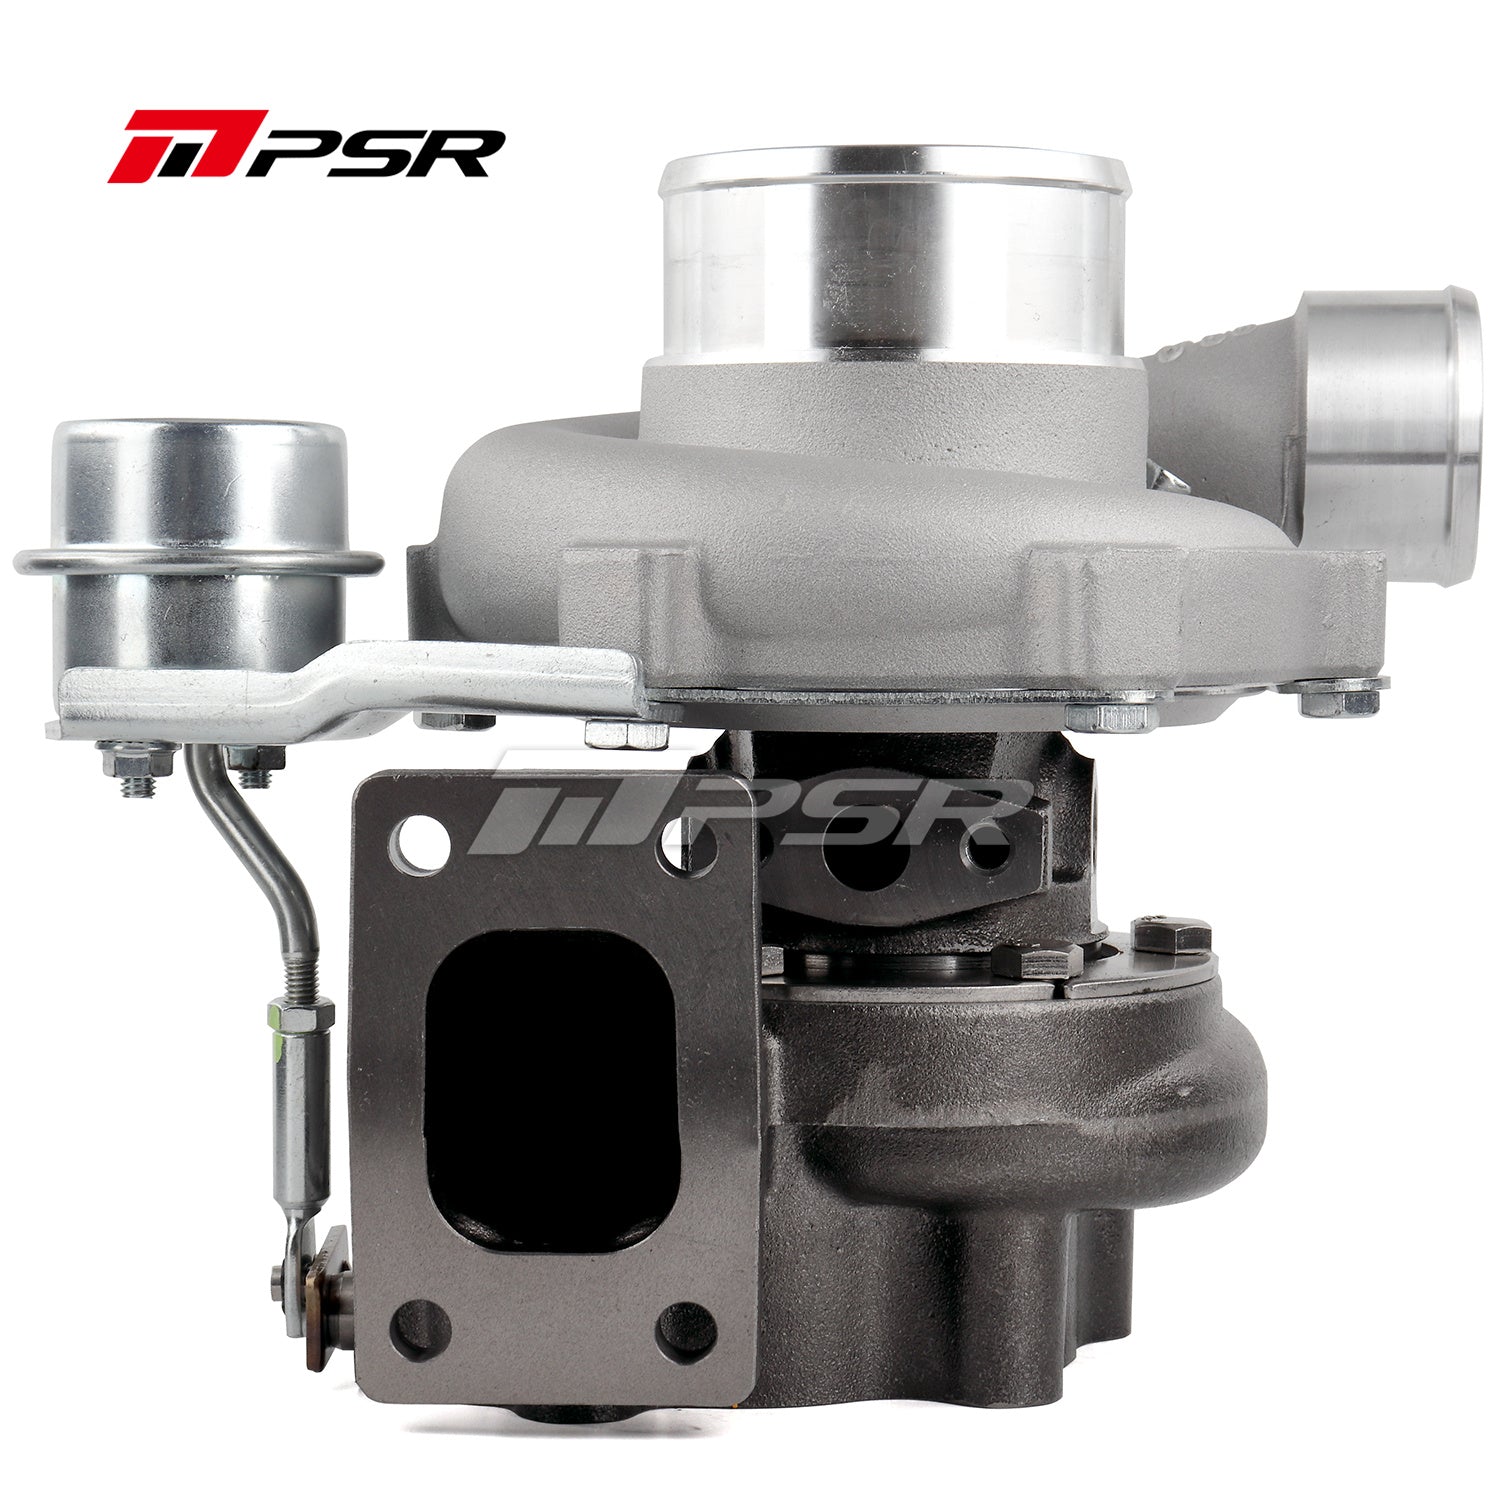 Billet Actuator for PTG25 Series Turbos